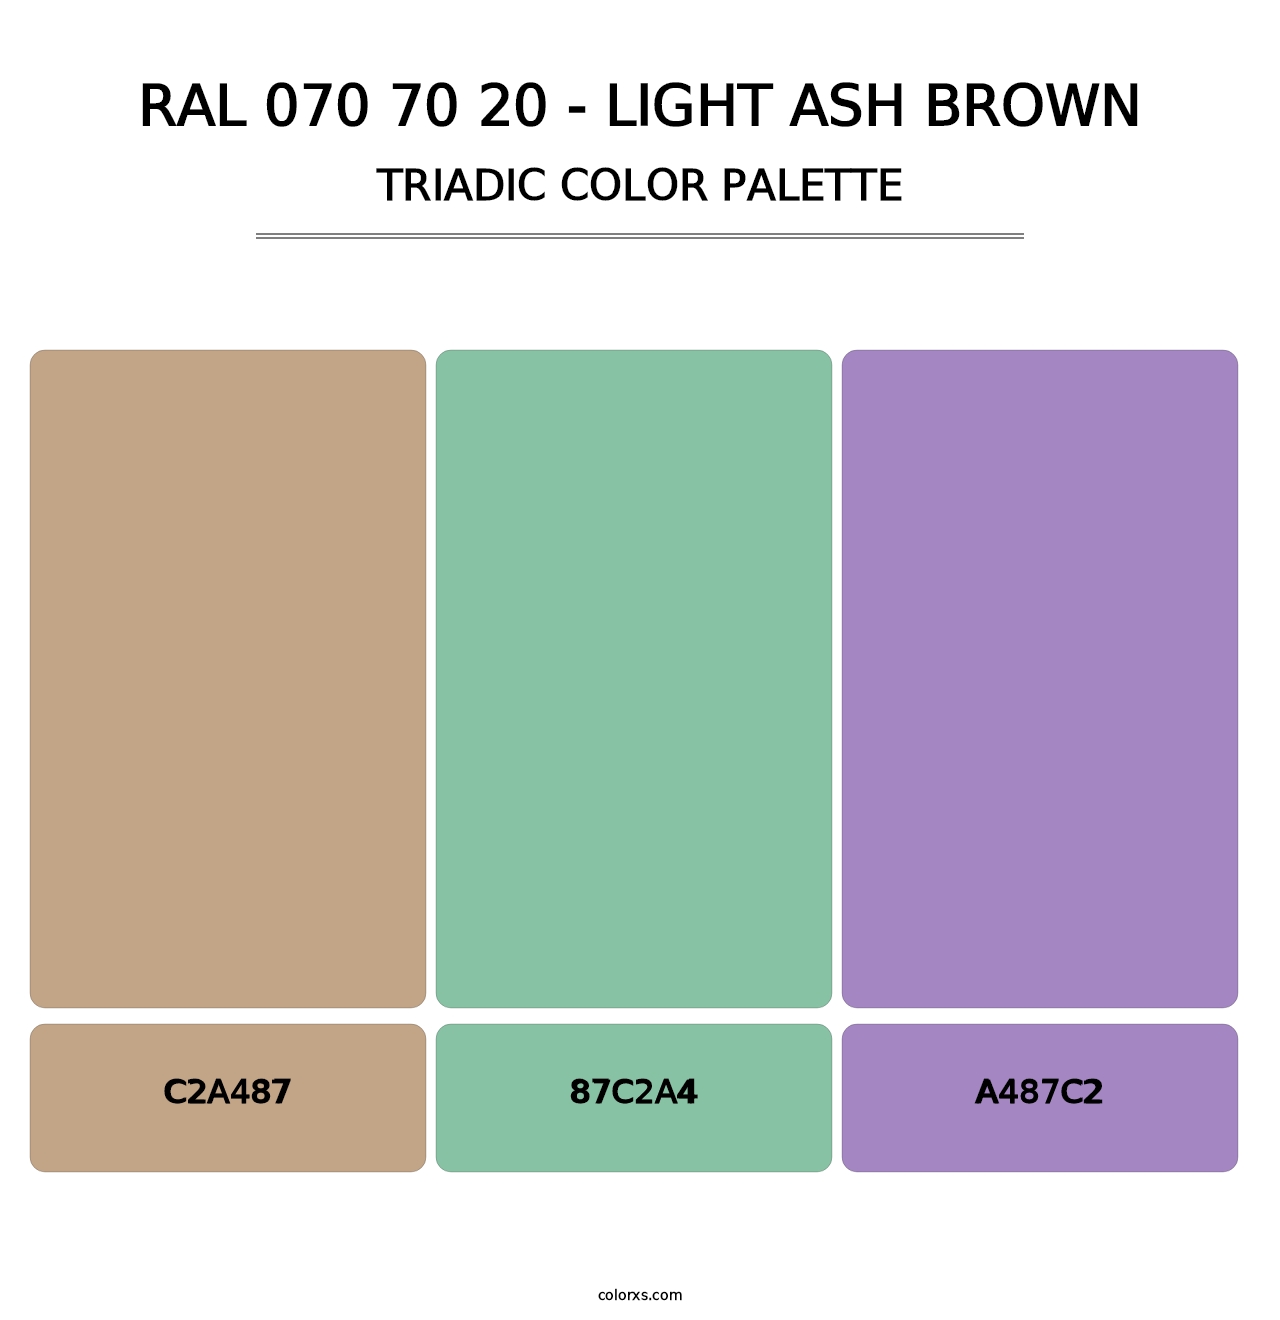 RAL 070 70 20 - Light Ash Brown - Triadic Color Palette